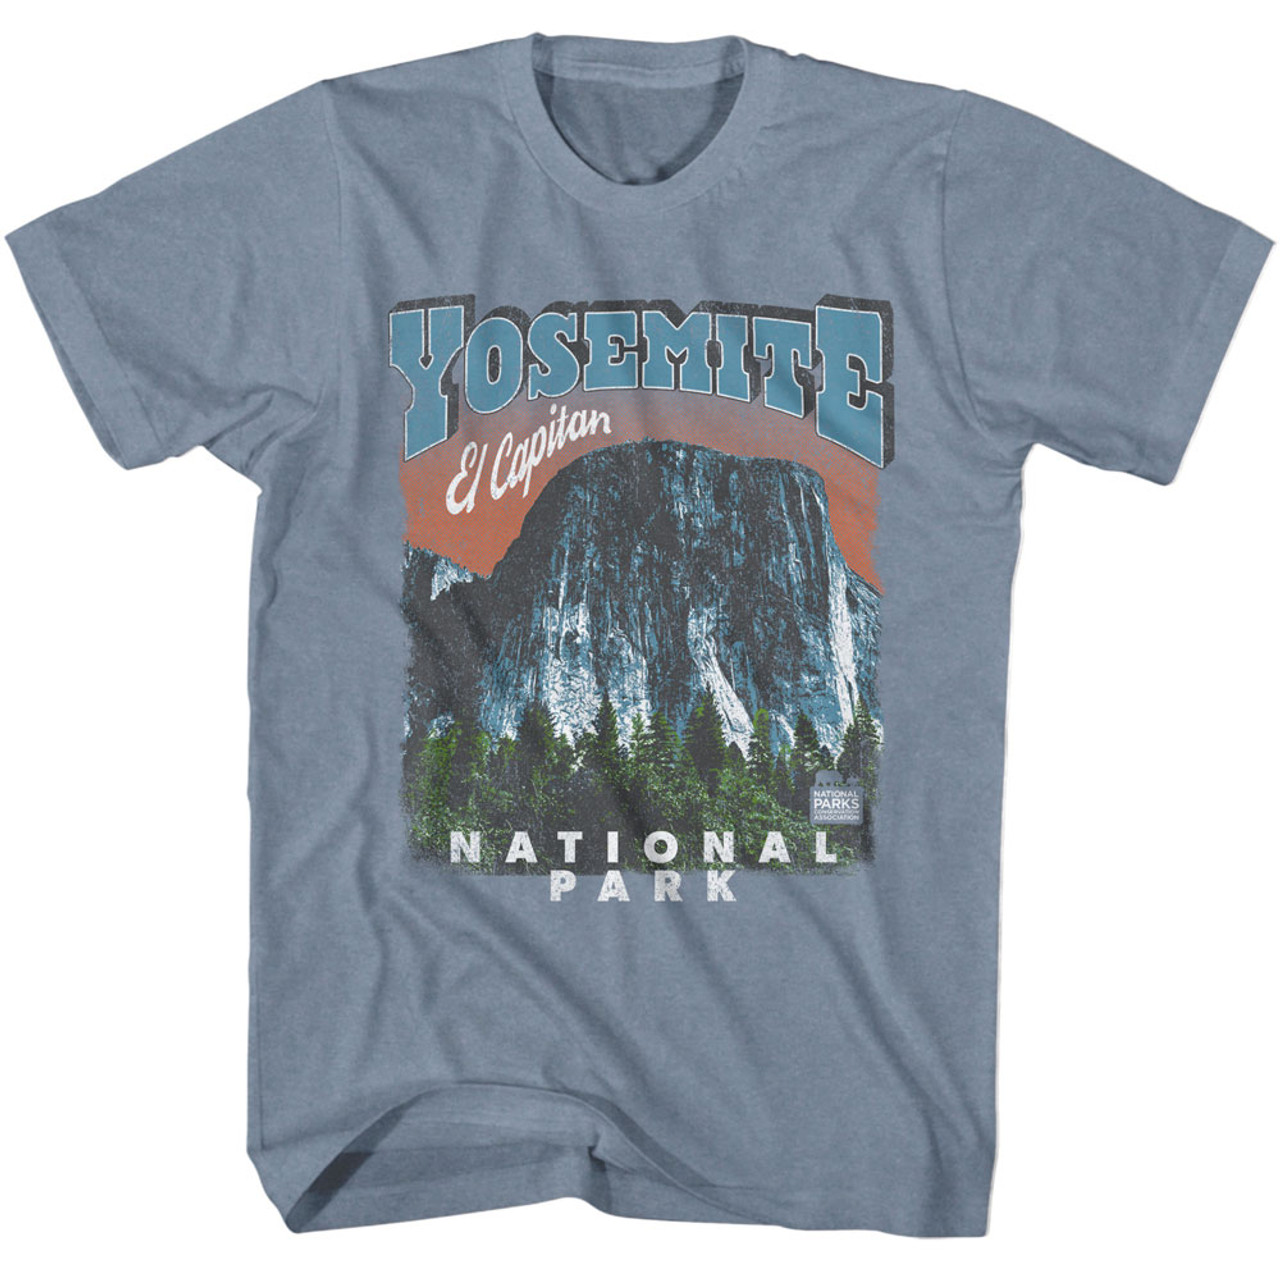 National Parks Foundation Yosemite's El Capitan T-Shirt